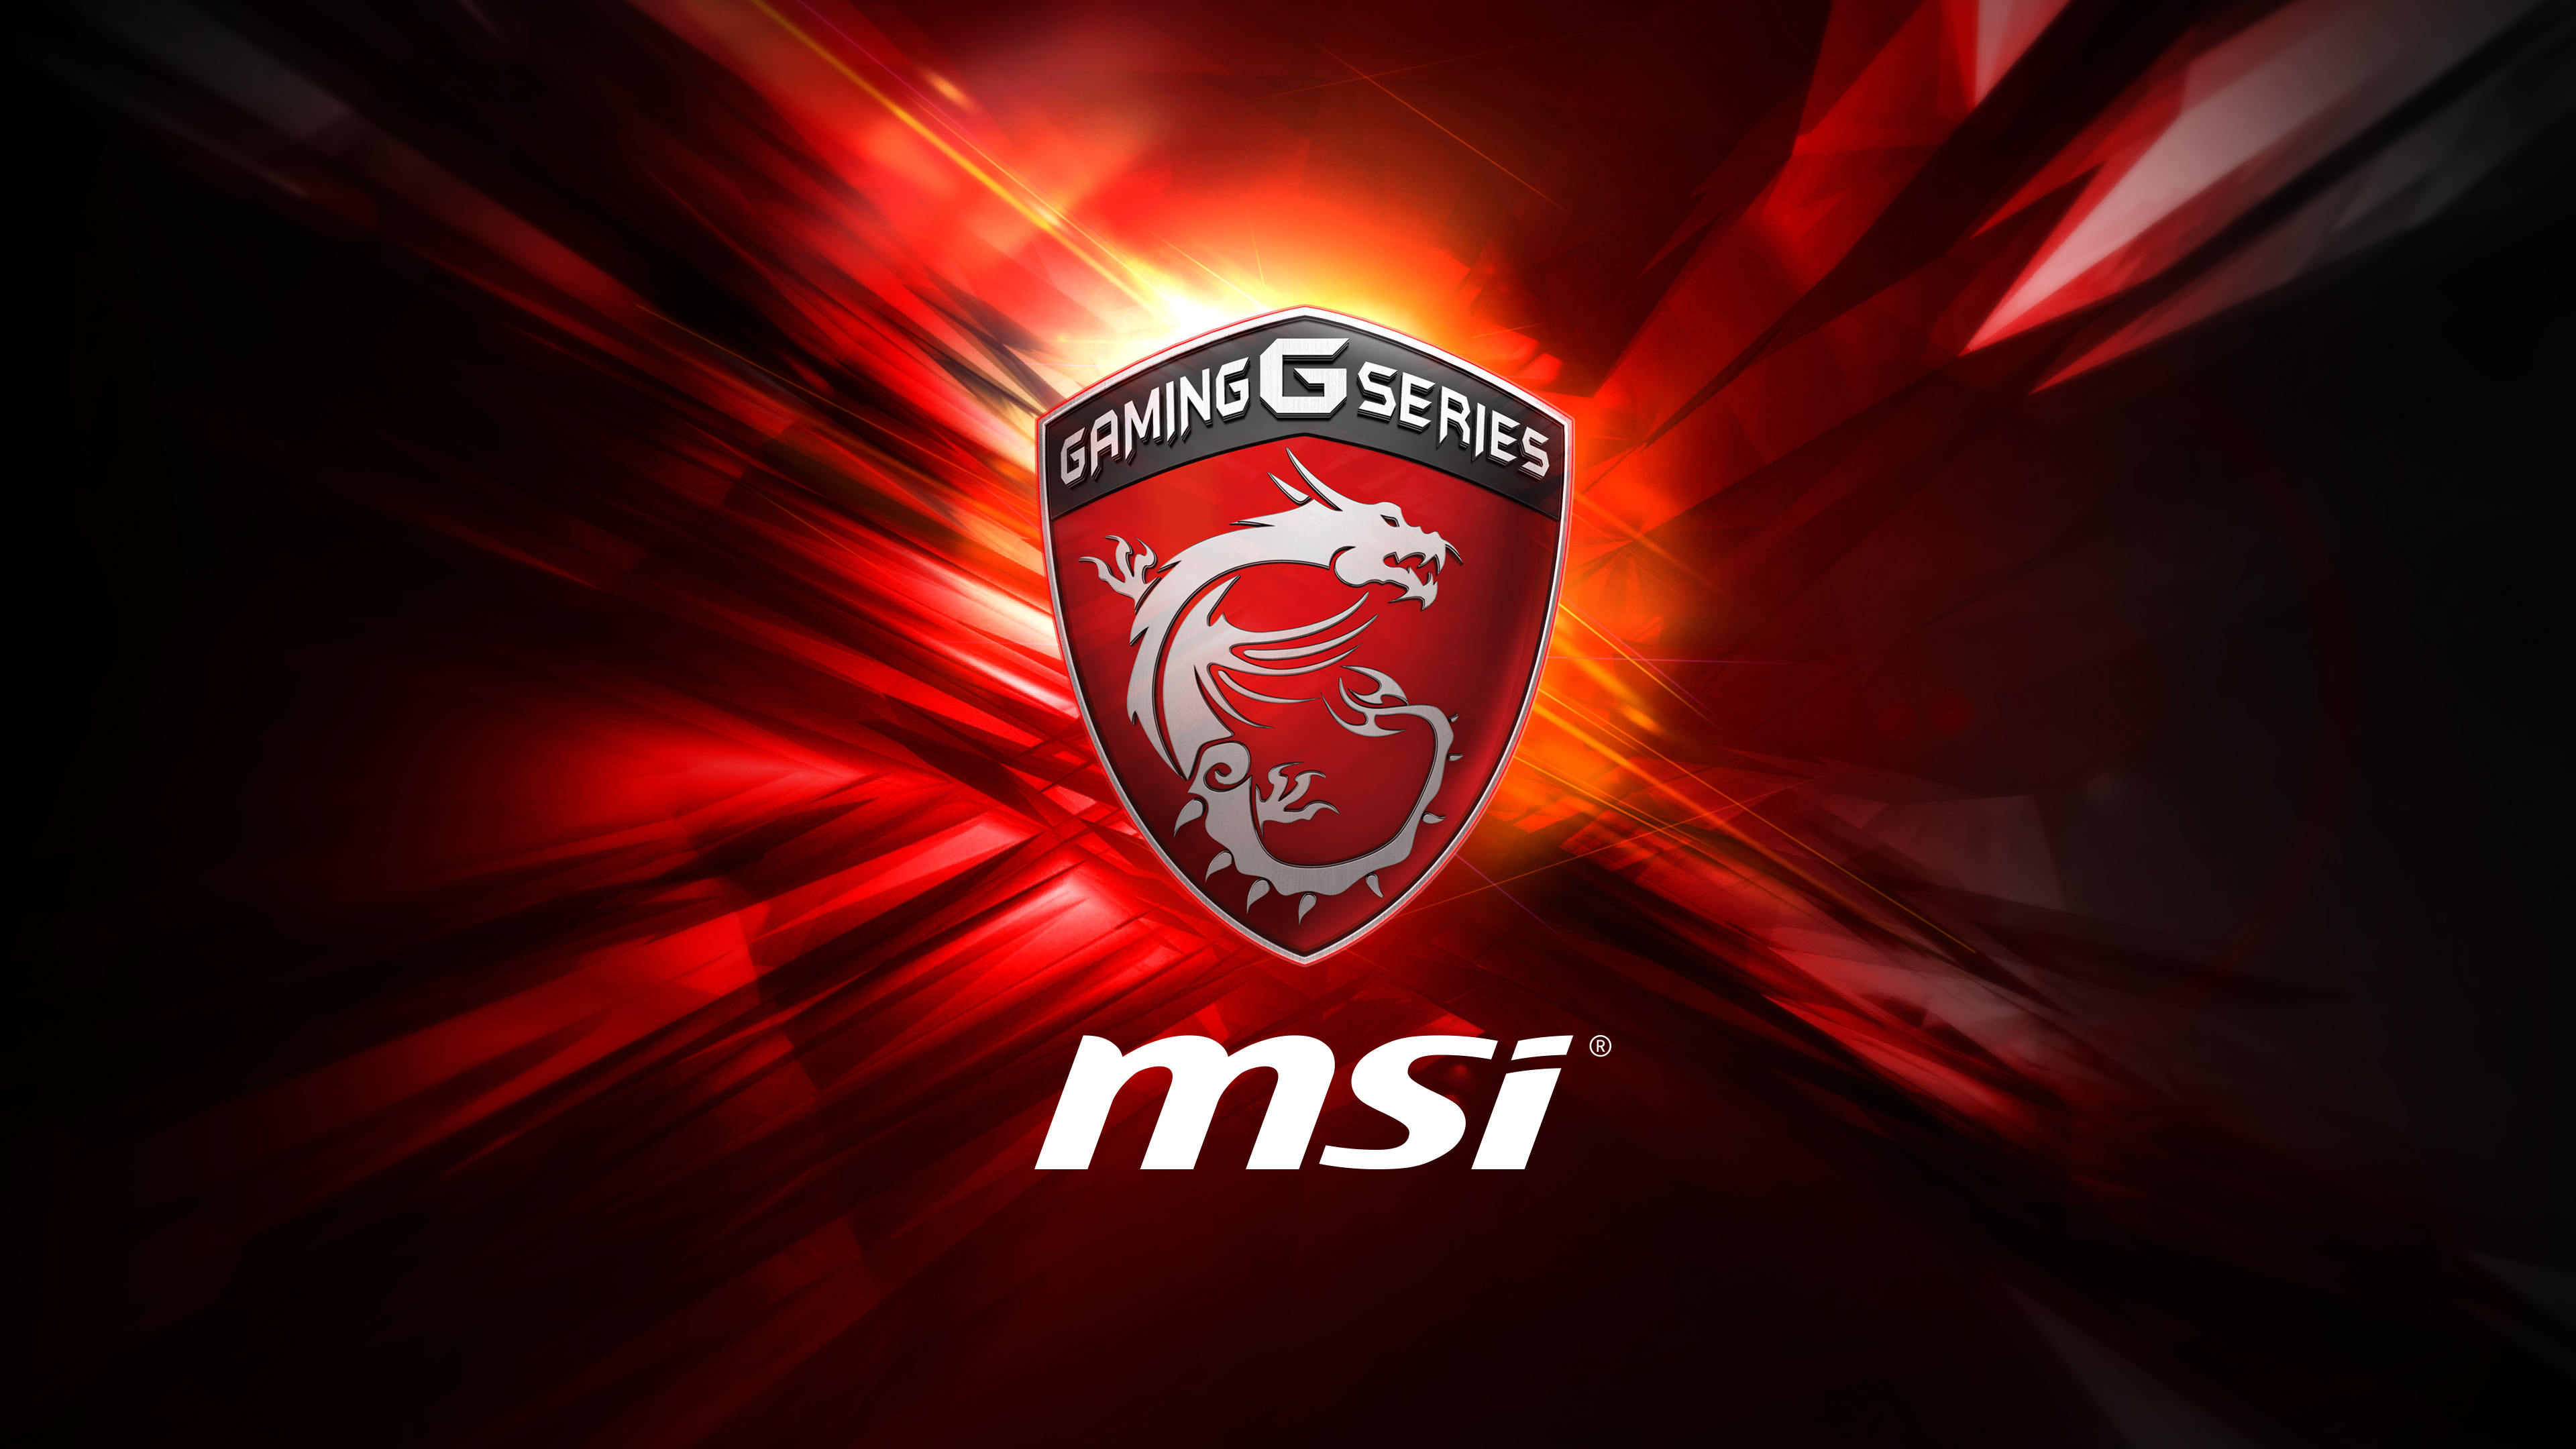 MSI логотип